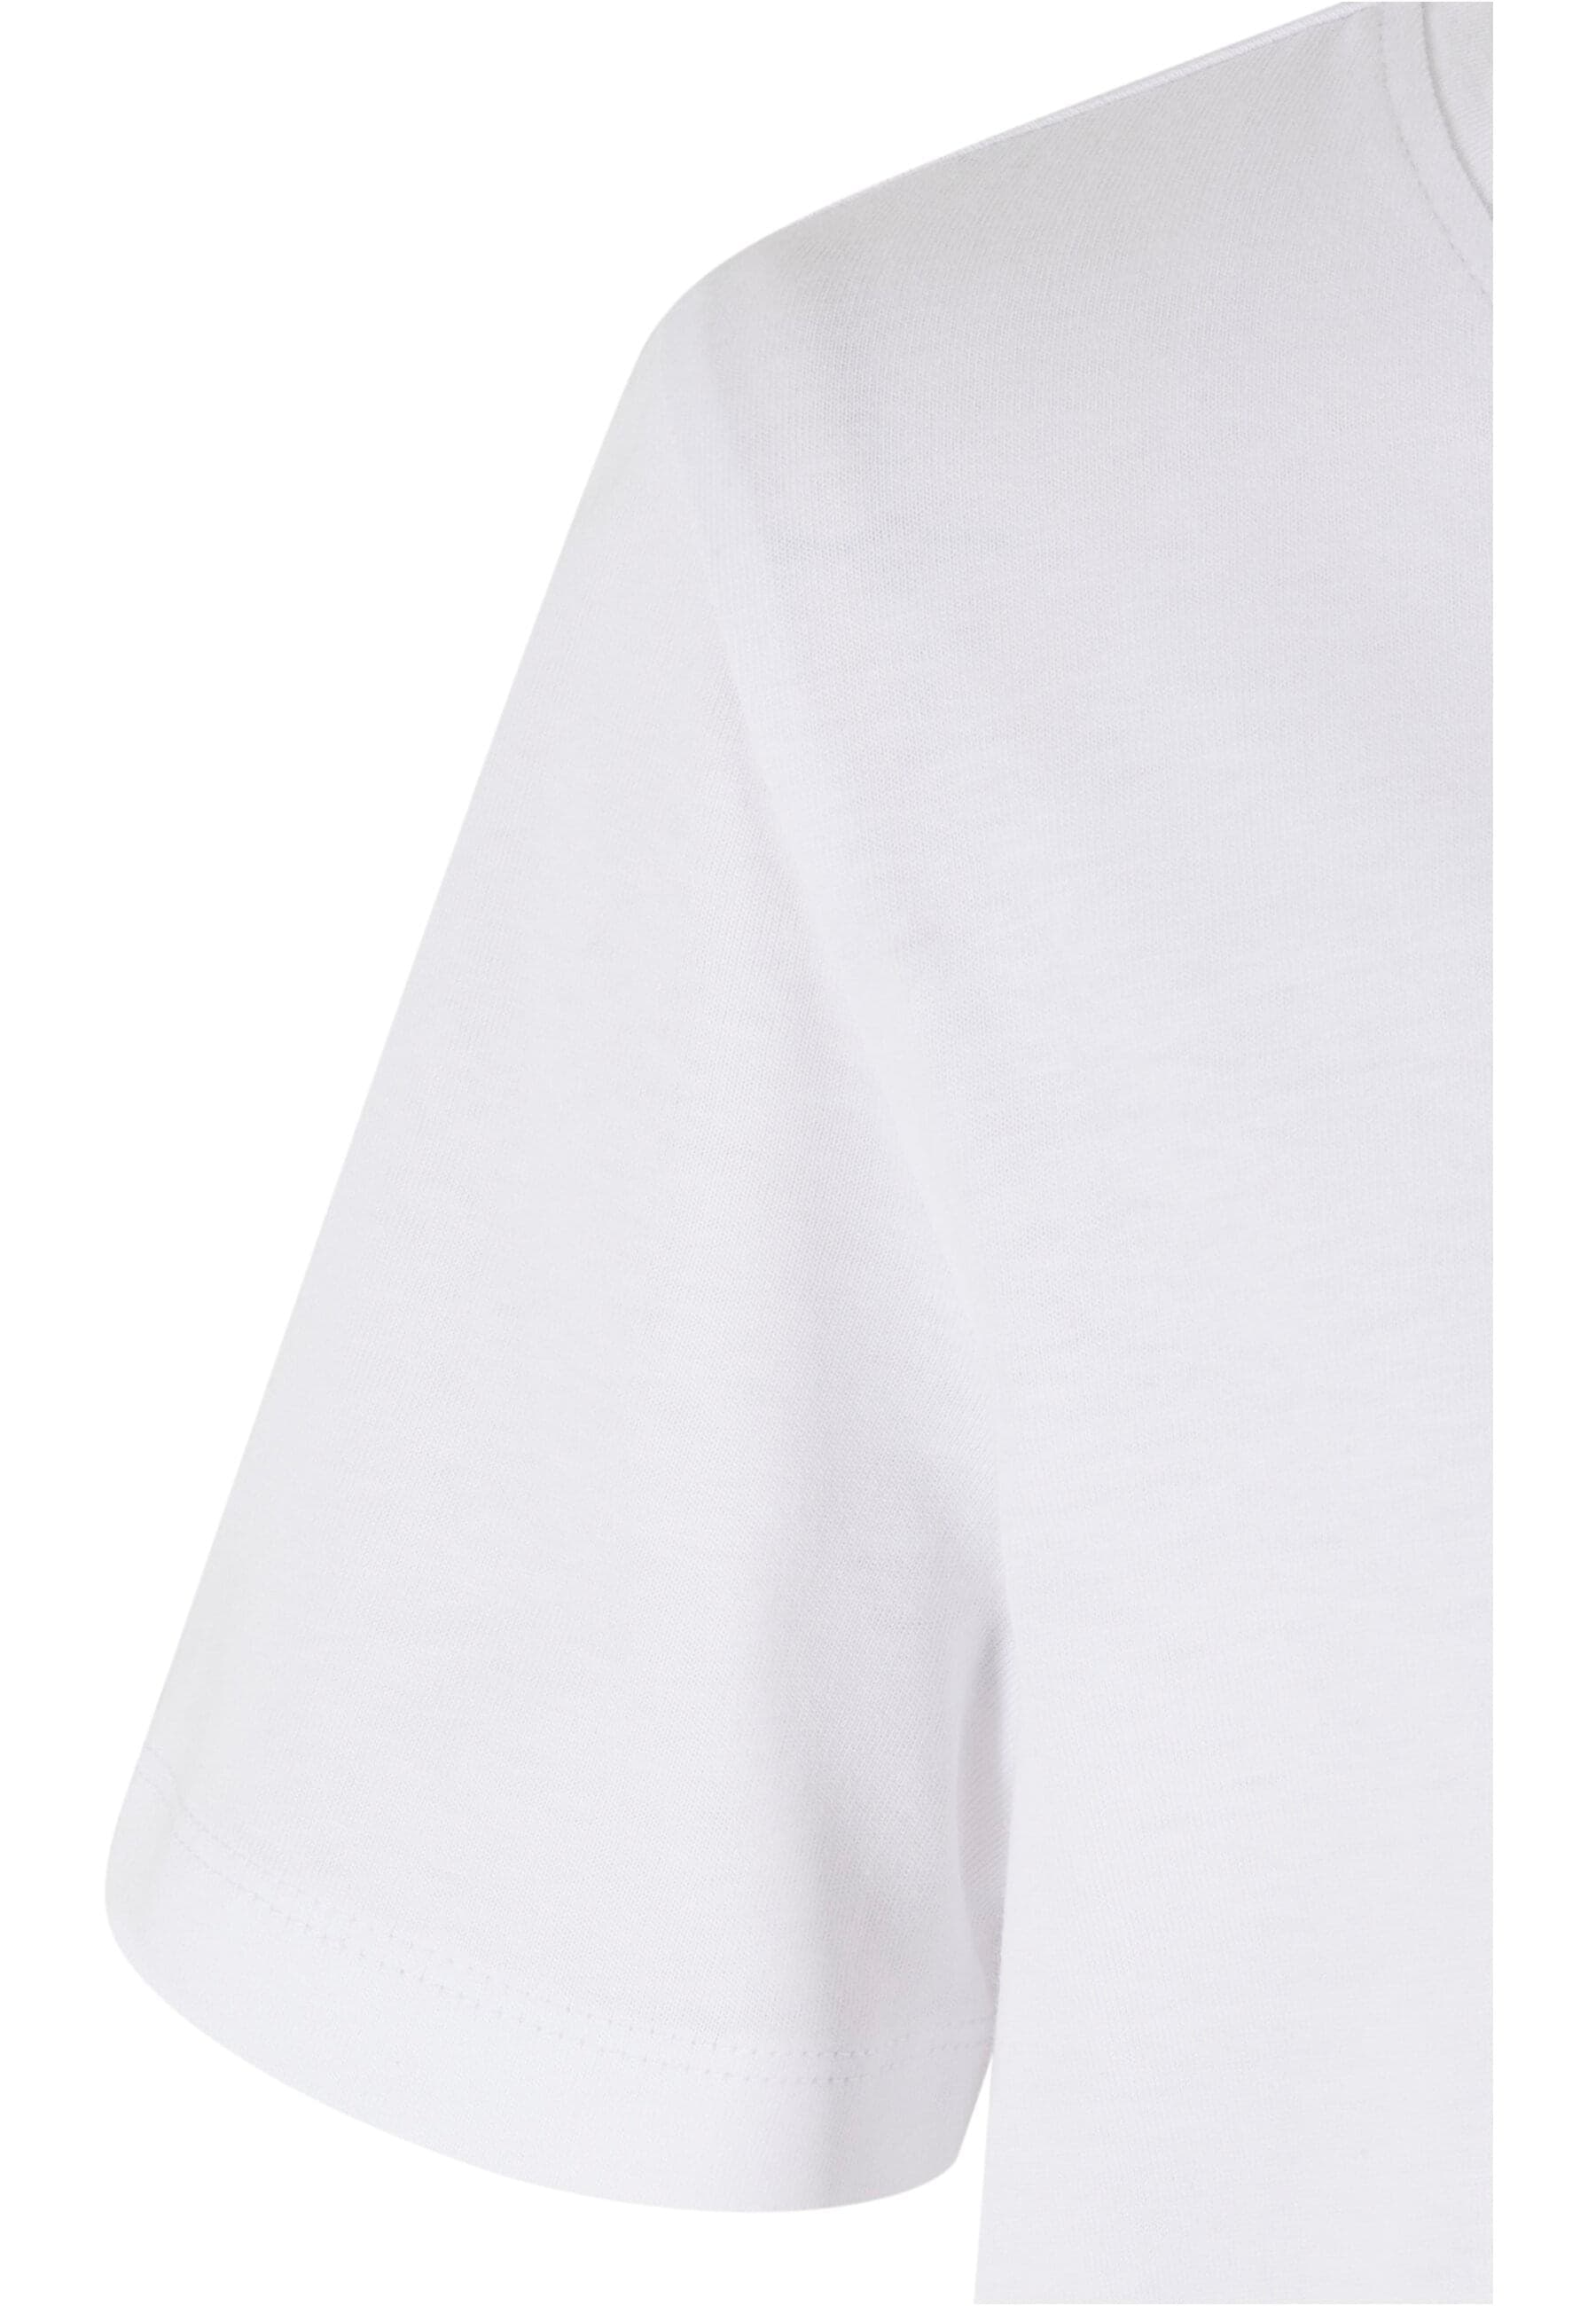 URBAN BAUR (1 »Damen kaufen Dress«, tlg.) | CLASSICS Girls Jerseykleid Tee Valance